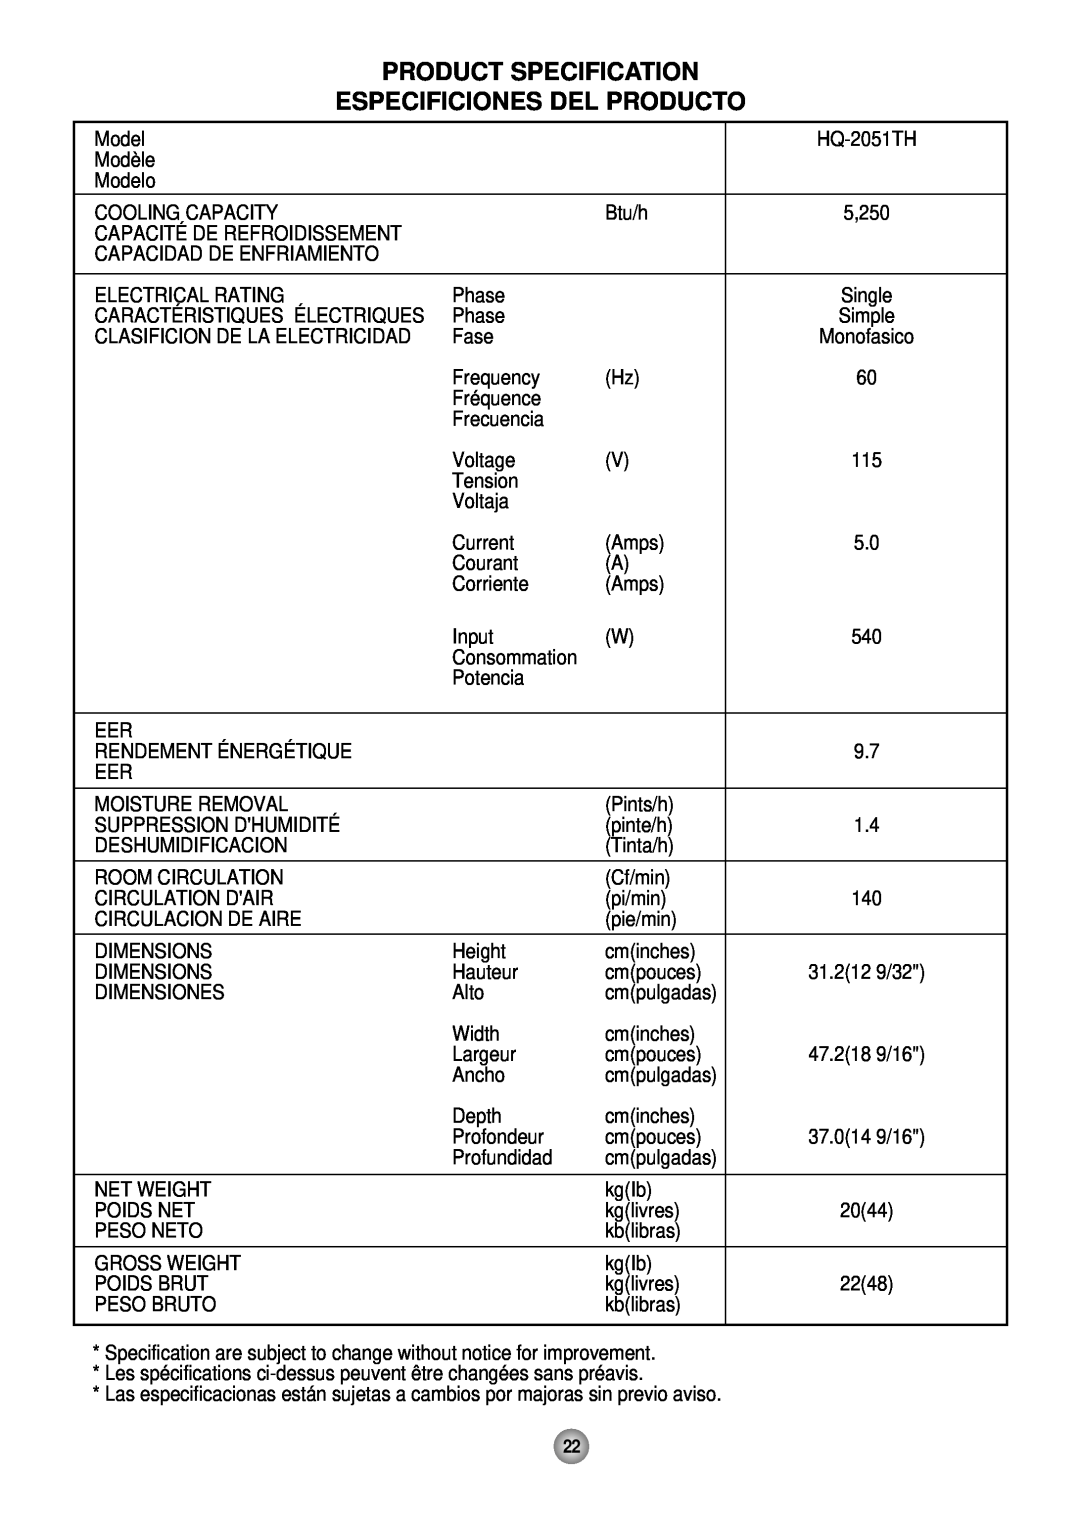 Panasonic HQ-2051TH manual Product Specification Especificiones Del Producto 